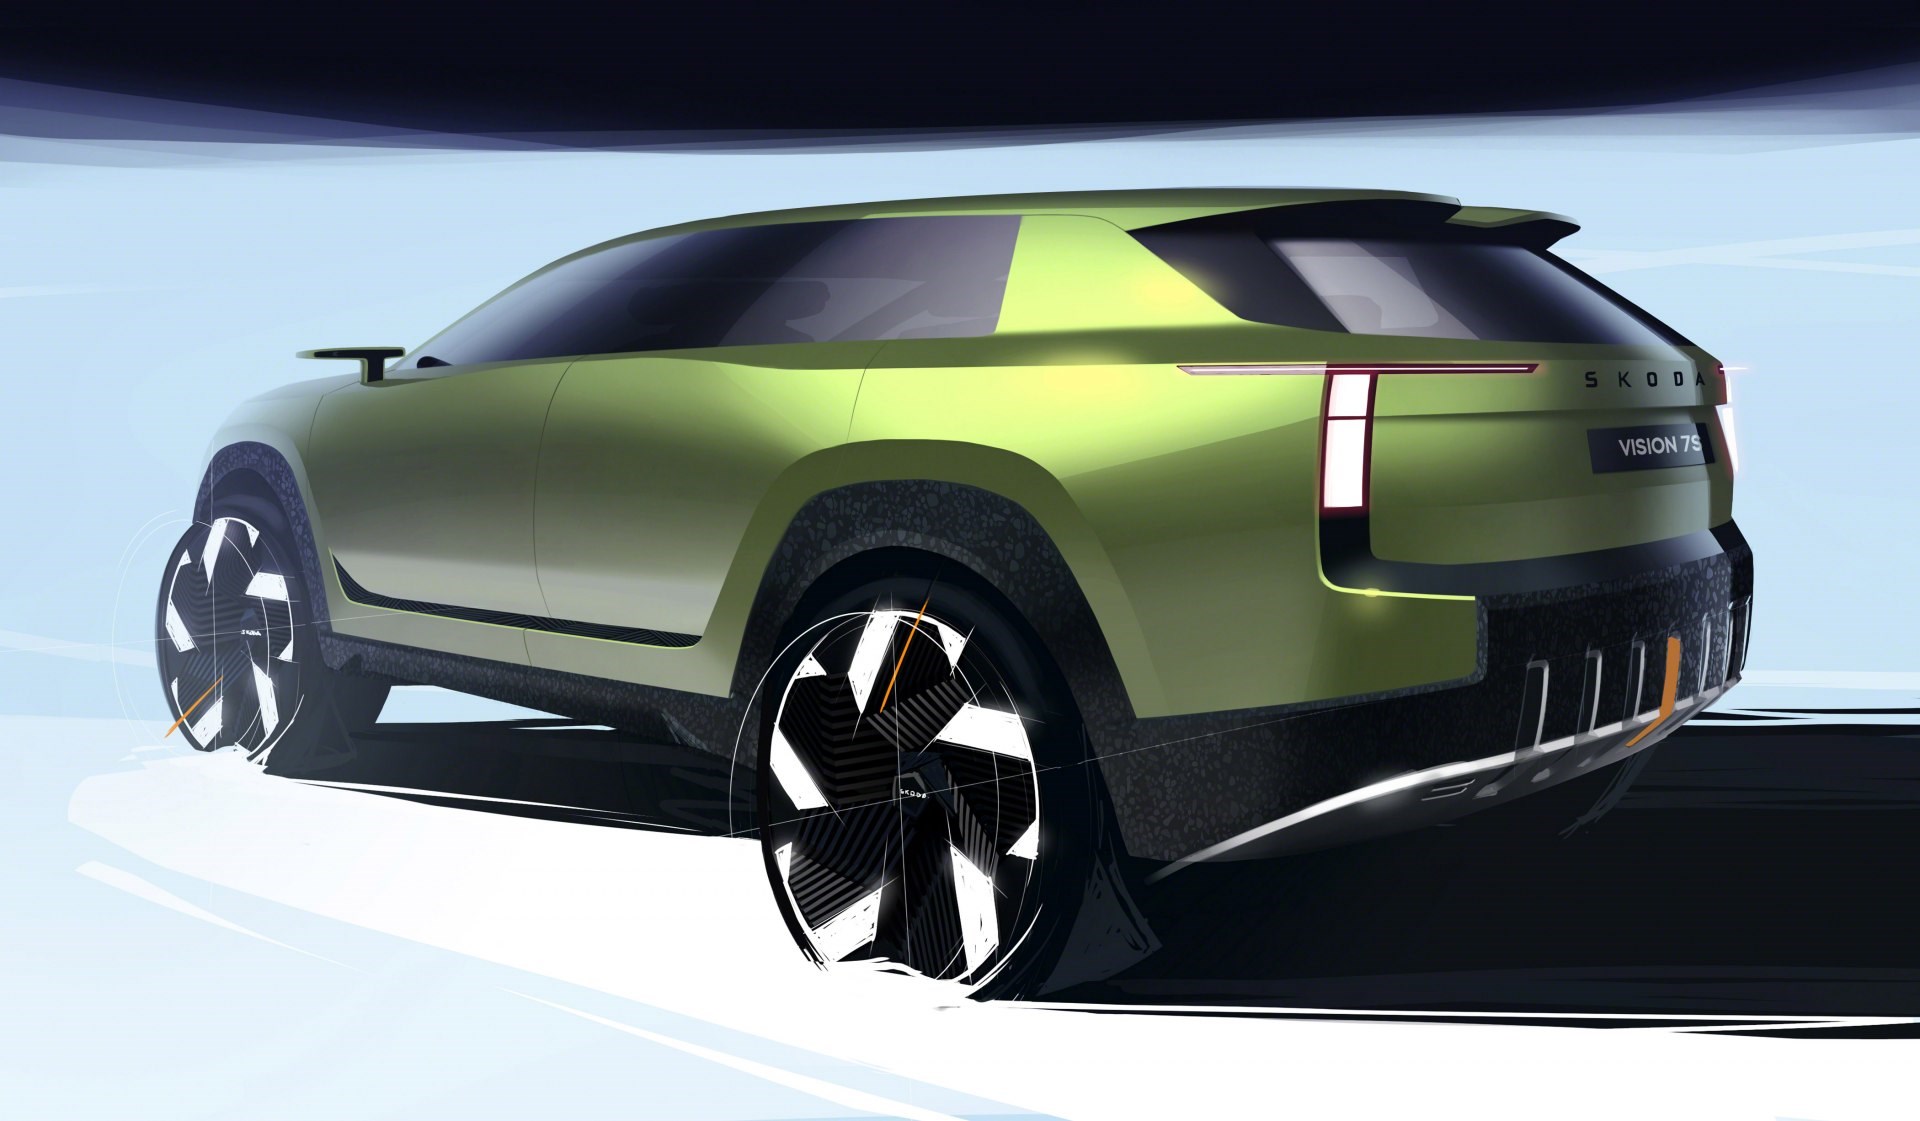 Skoda, elektrikli SUV konsepti Vision 7S'in çizimlerini paylaştı